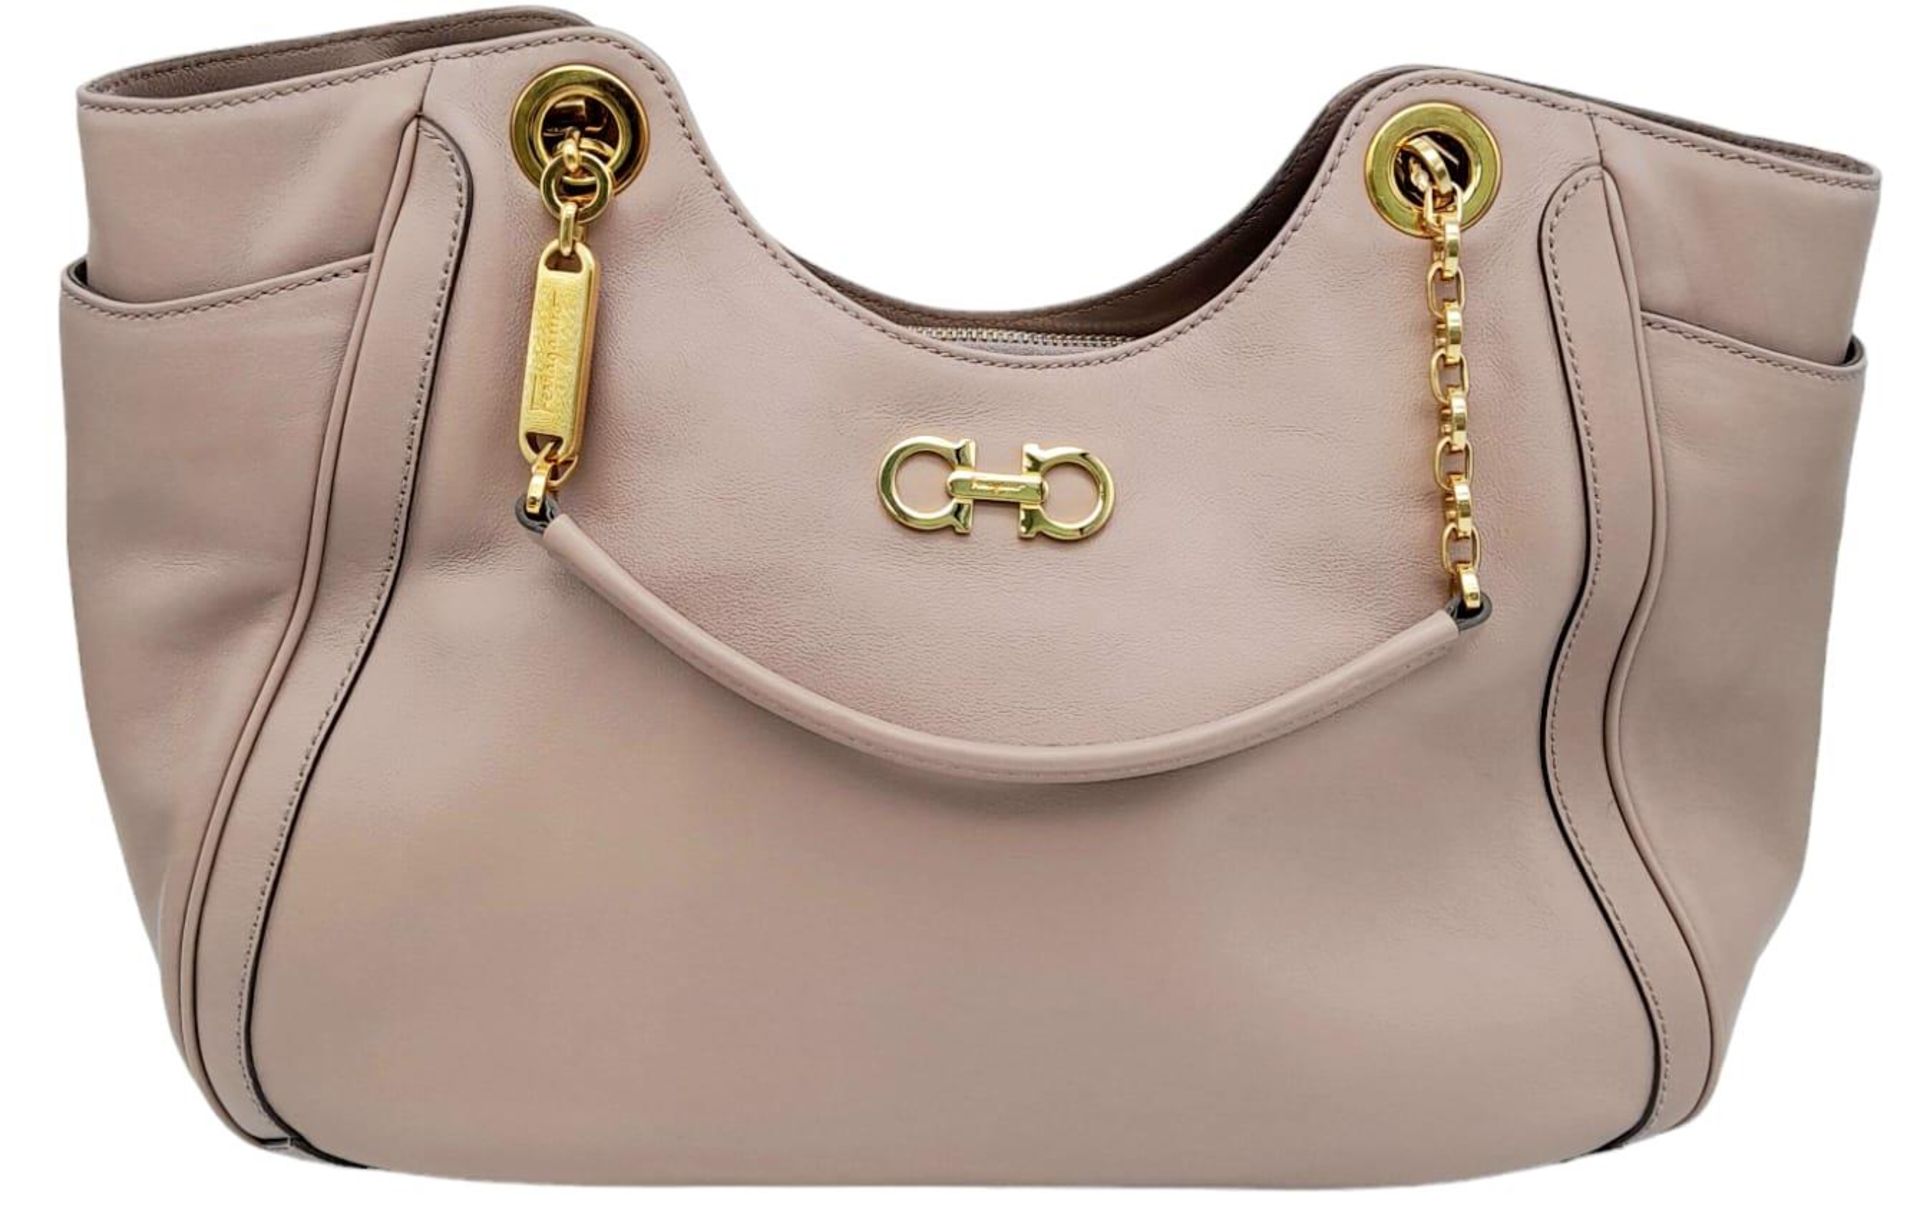 Salvatore Ferragamo Taupe Handbag. Double handle, central zipped compartment, gold tones and